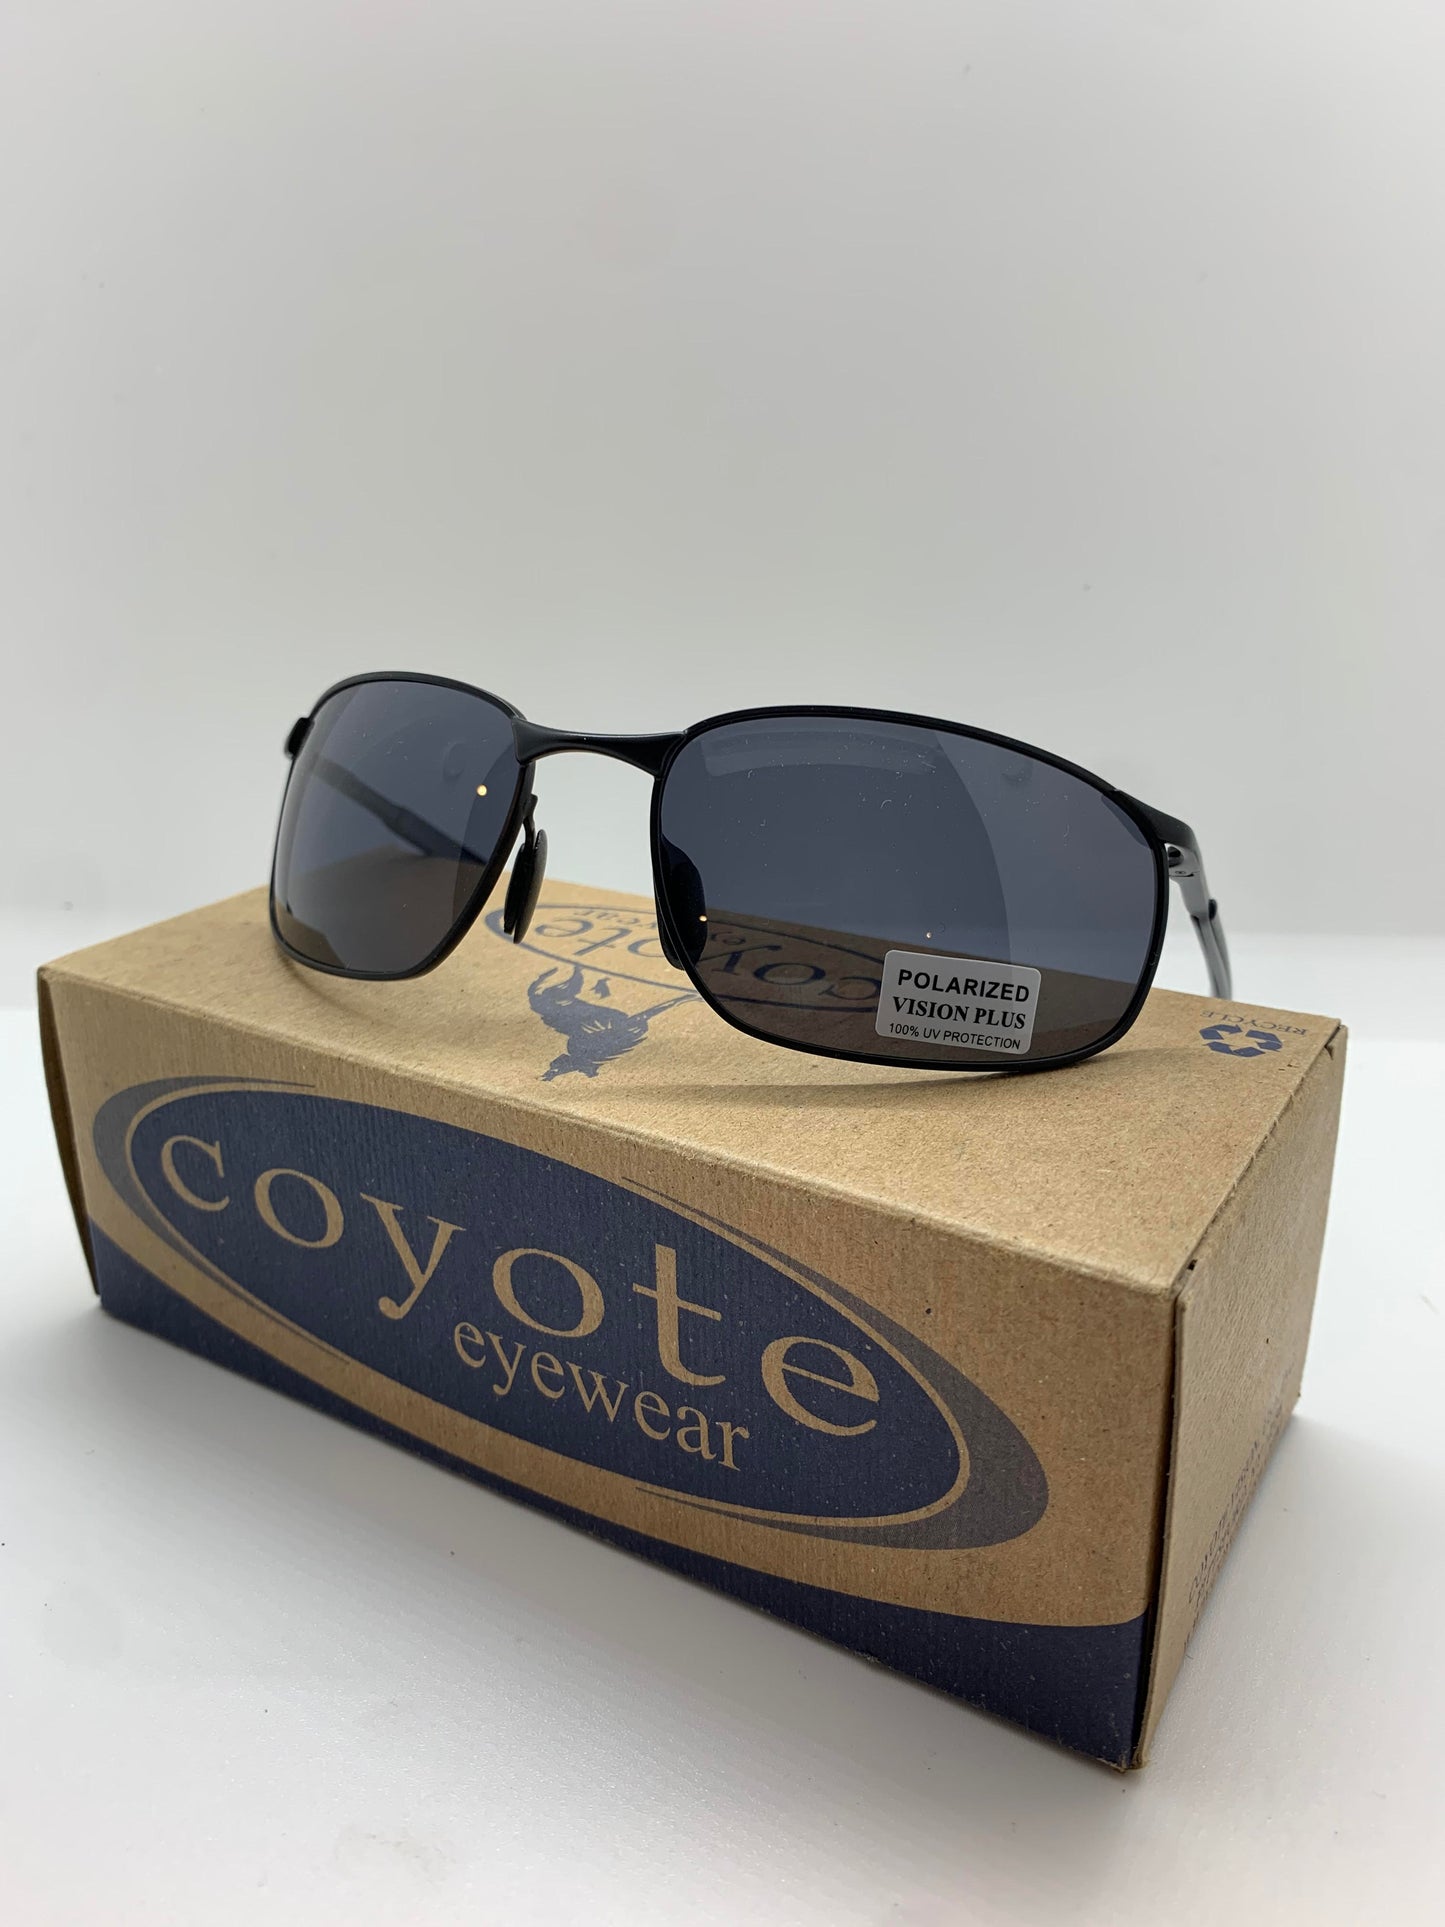 Coyote P-11 Polarized Vision Plus Glasses